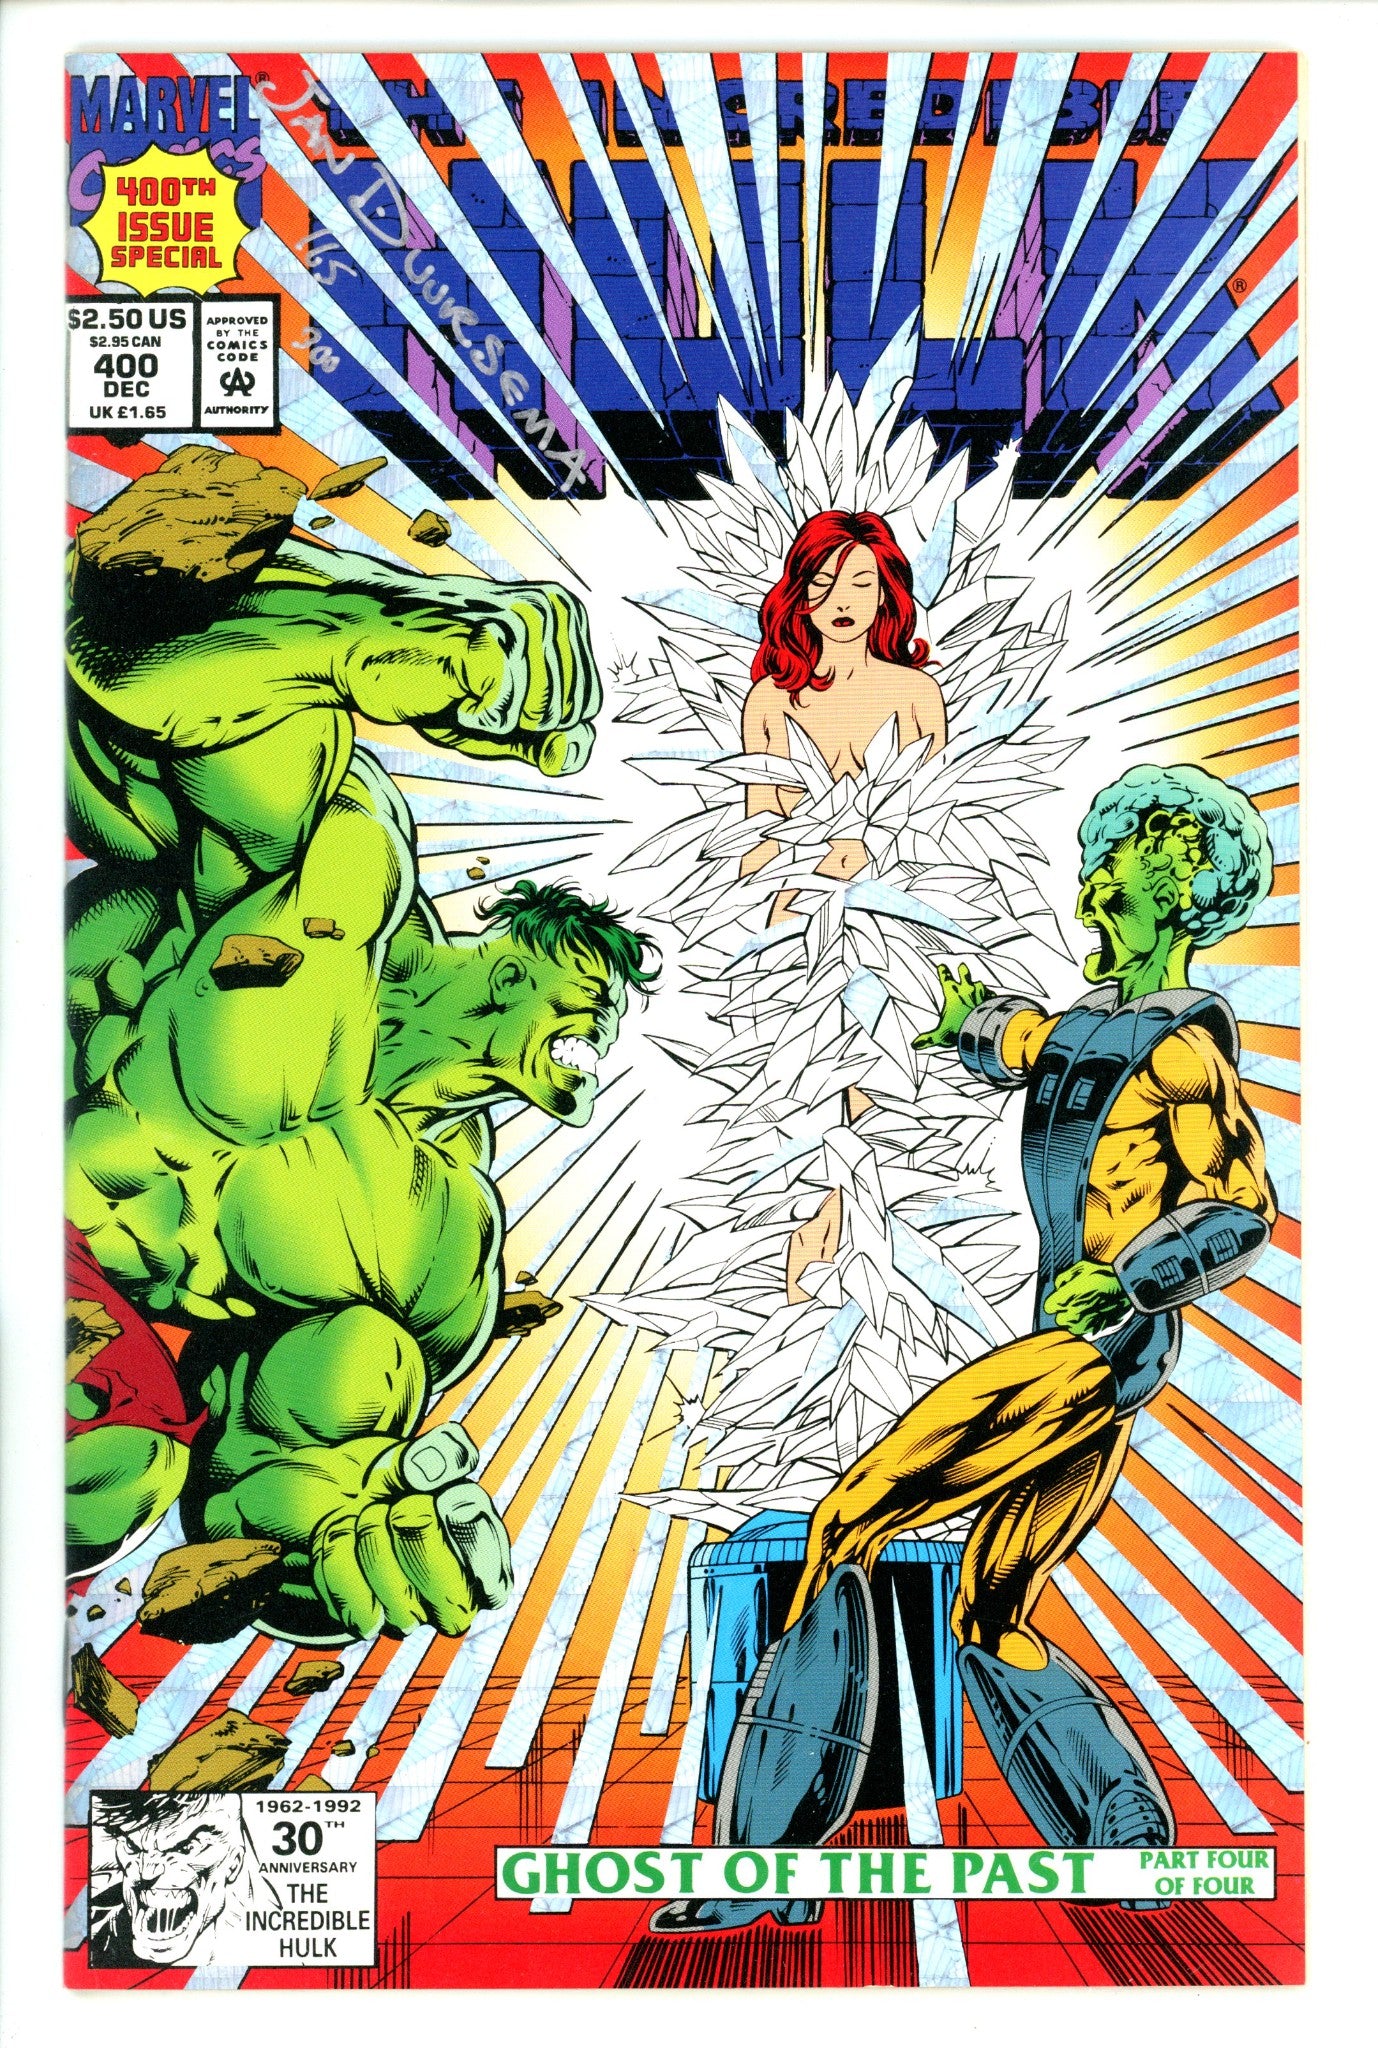 The Incredible Hulk Vol 1 400 VF/NM (9.0) (1992) Signed x1 Cover Jan Duursema 